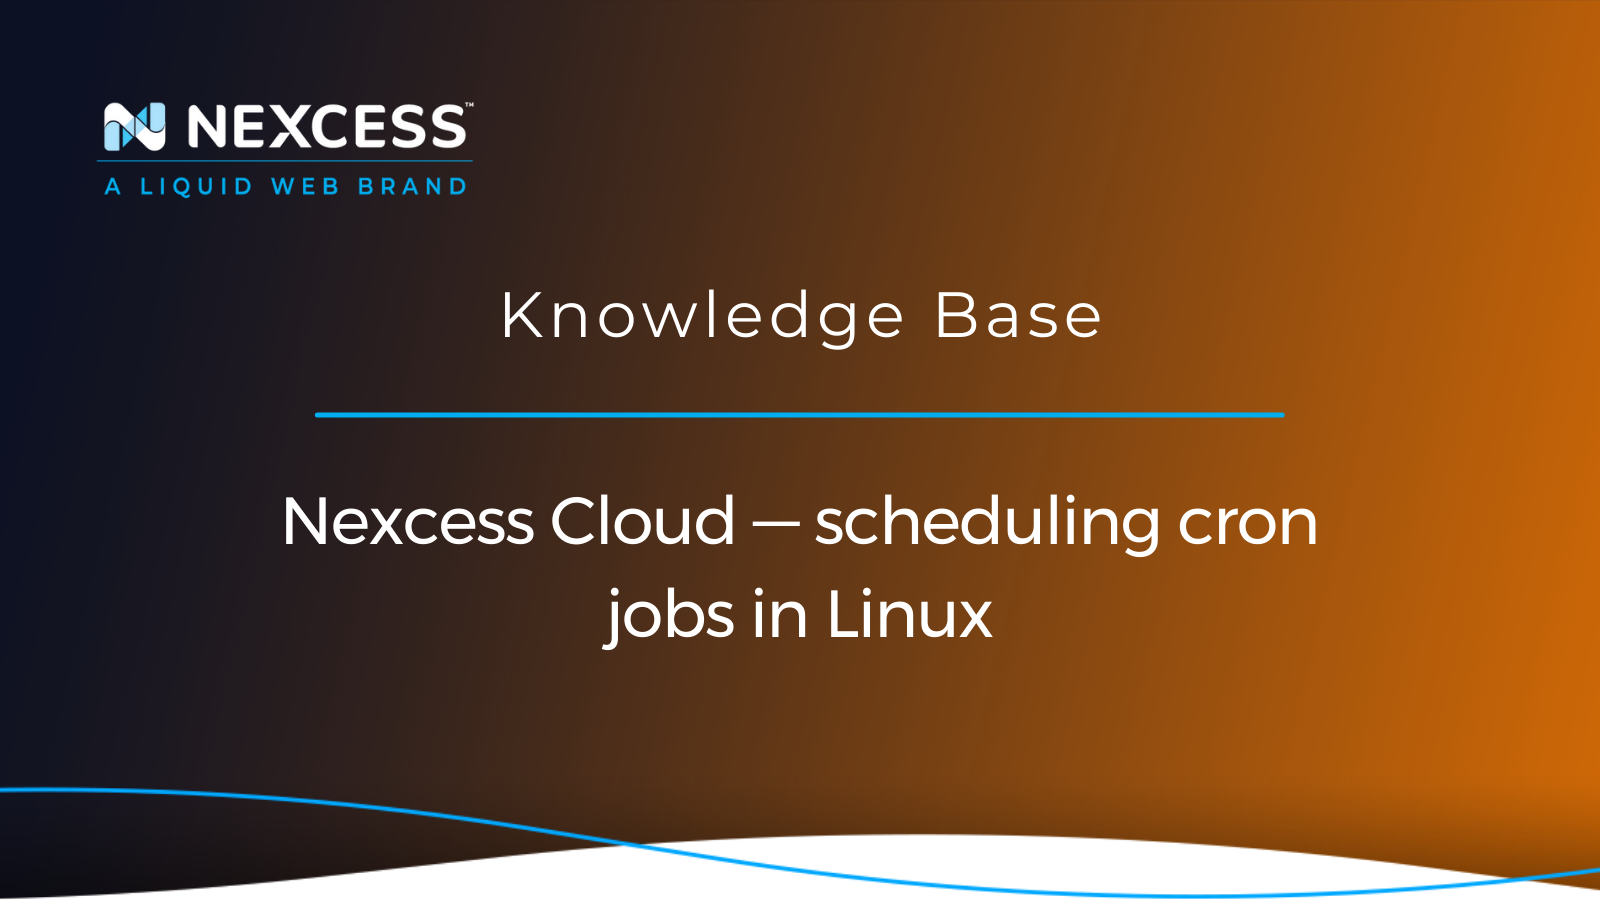 Nexcess Cloud — scheduling cron jobs in Linux